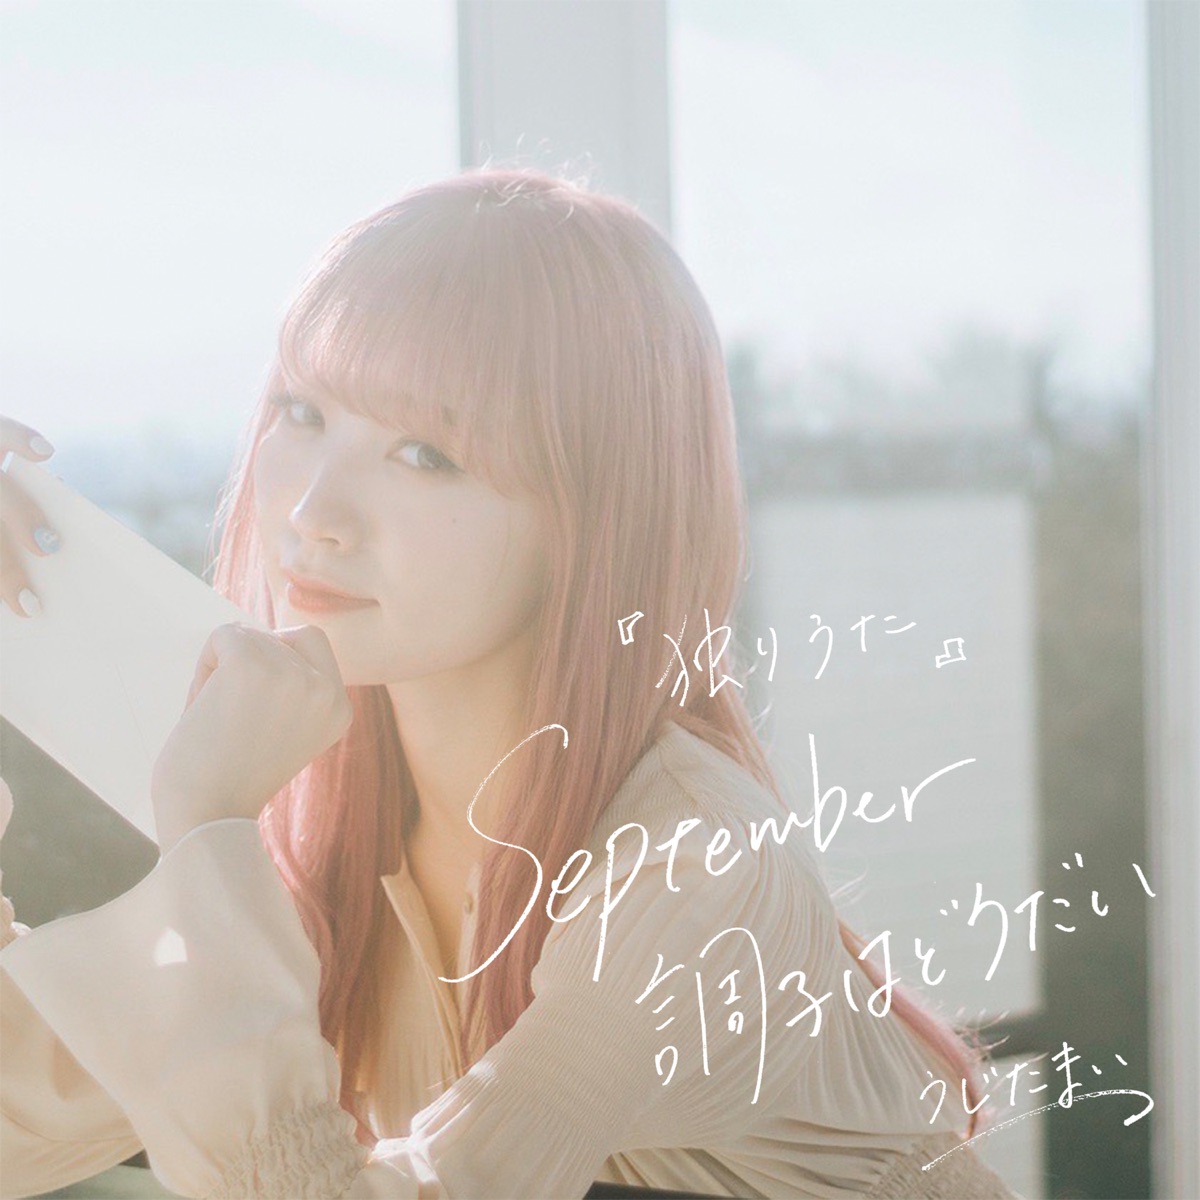 Cover for『Ujita Mai - Hitoriuta - September How You Doin'?』from the release『Hitoriuta - September How You Doin'?』